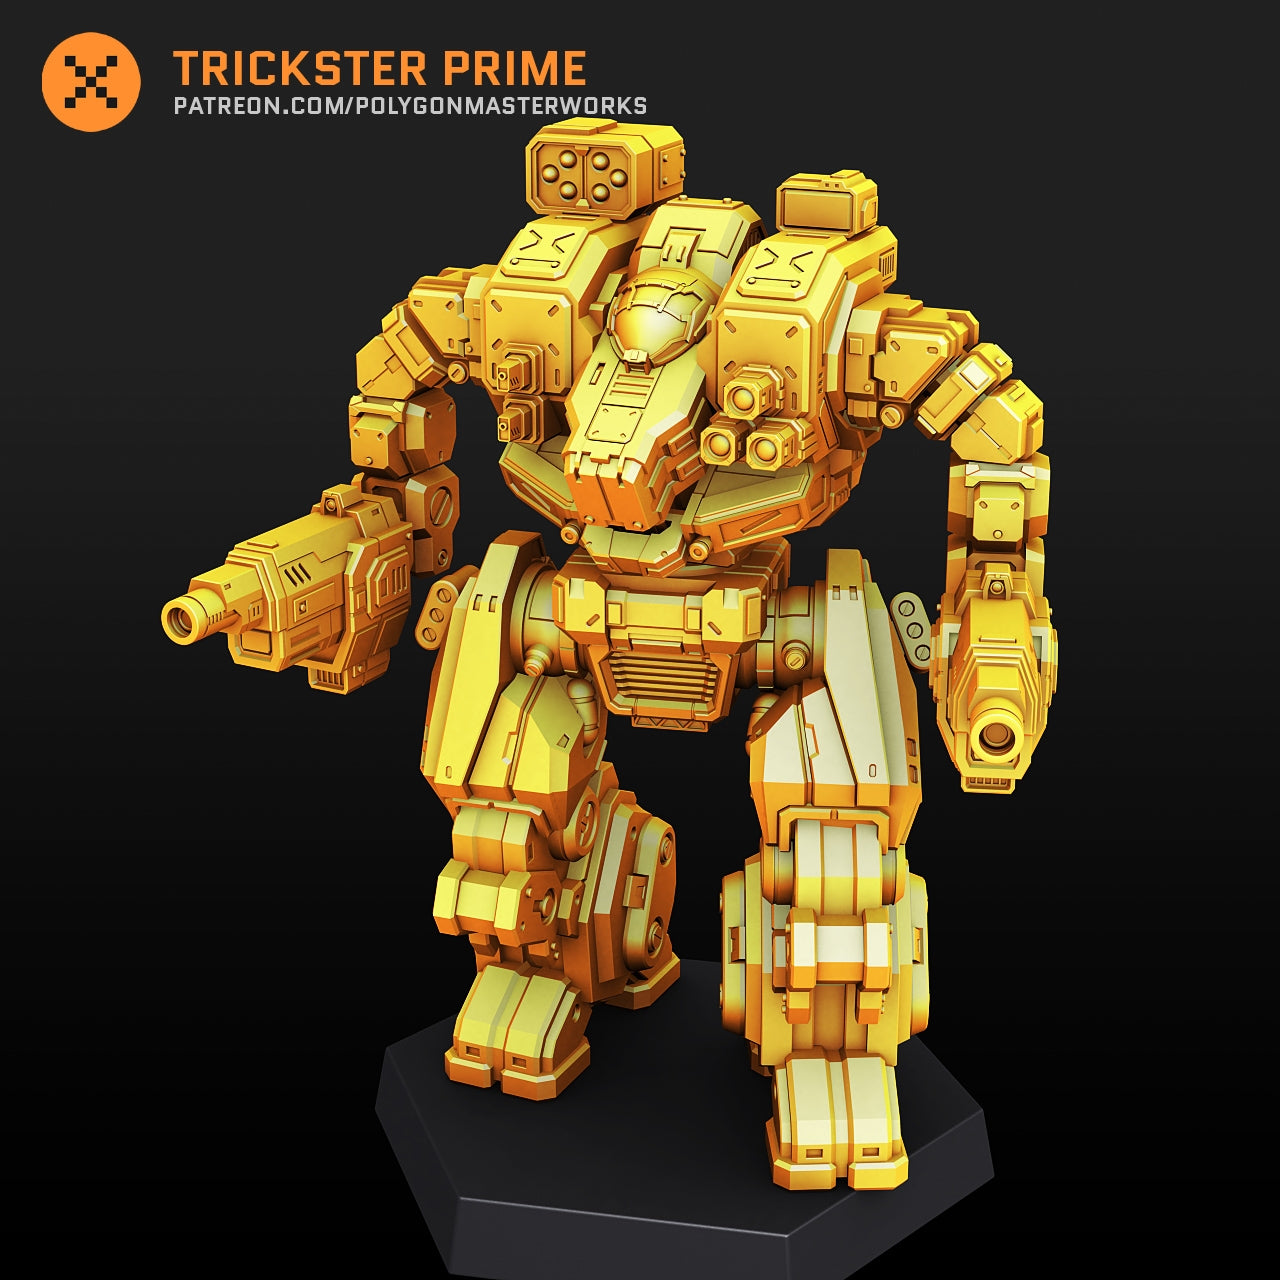 Trickster Prime (By PMW) Alternate Battletech Mechwarrior Miniatures